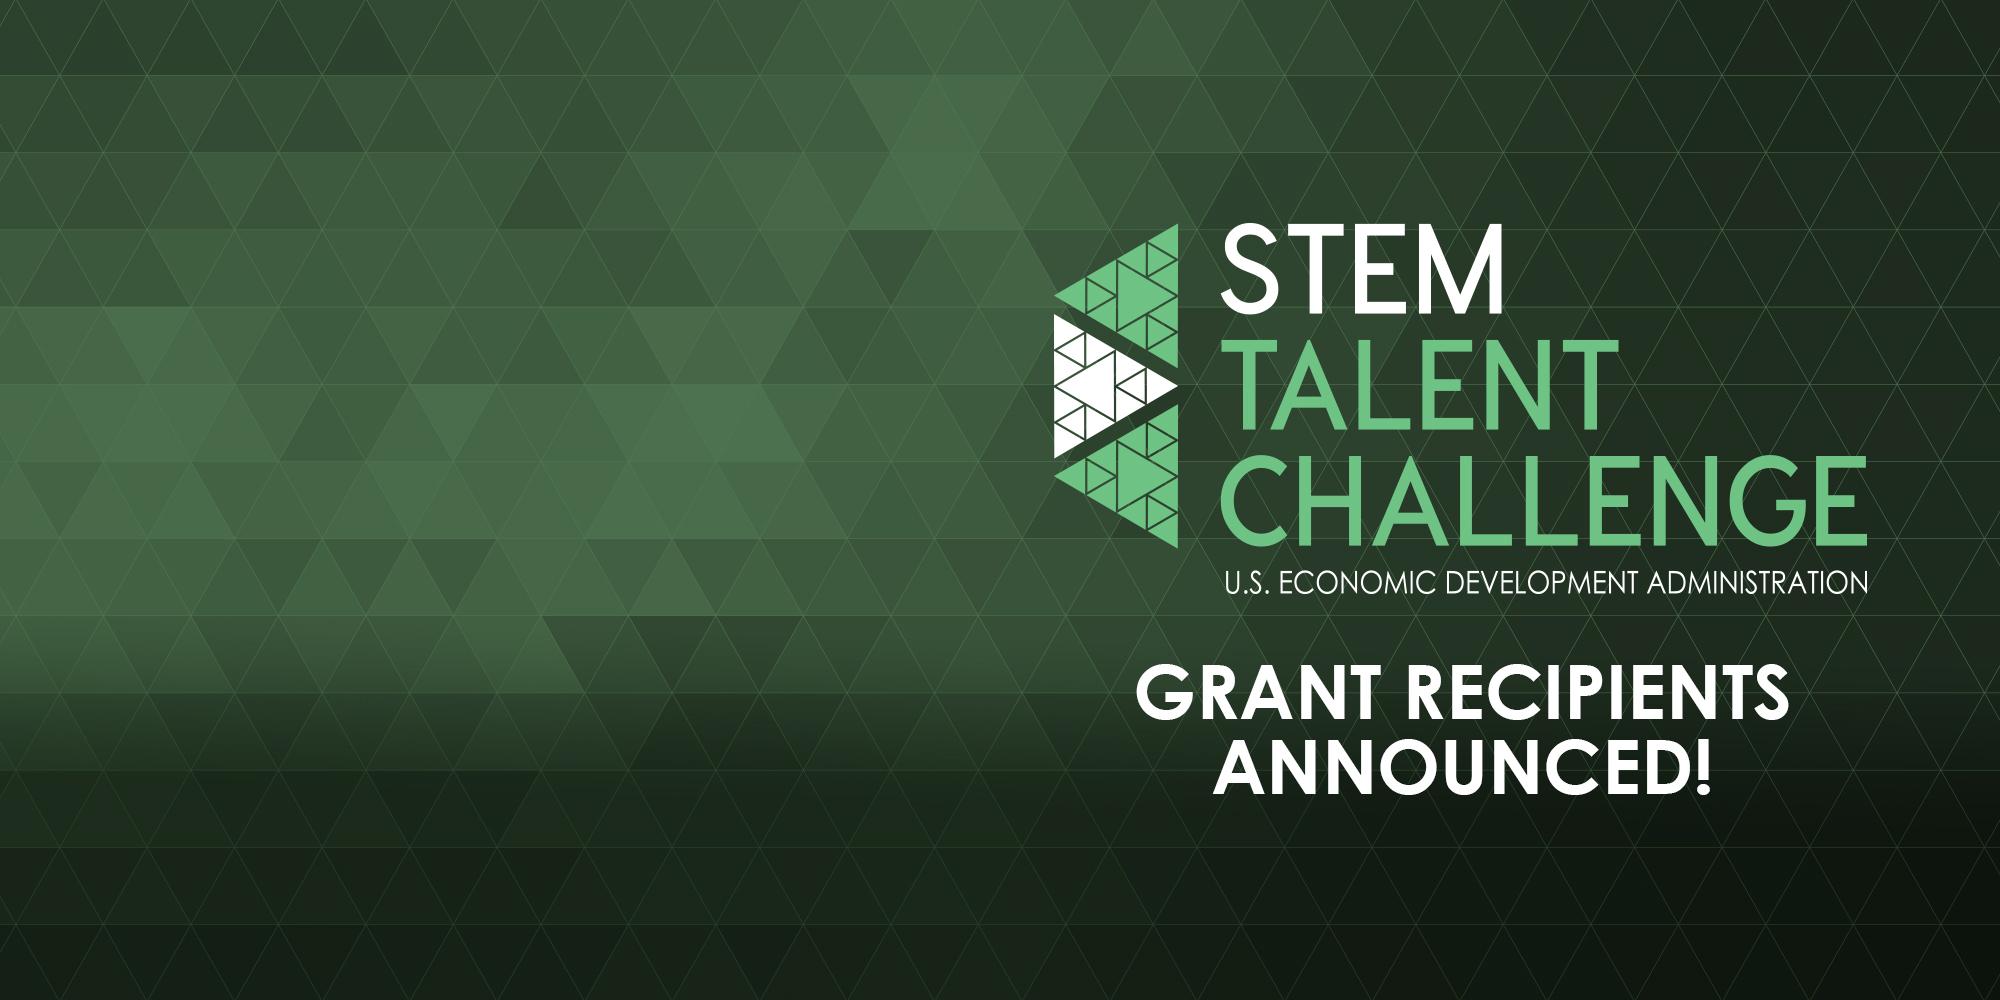 Stem Talent Challenge Grant Recipients Announced!